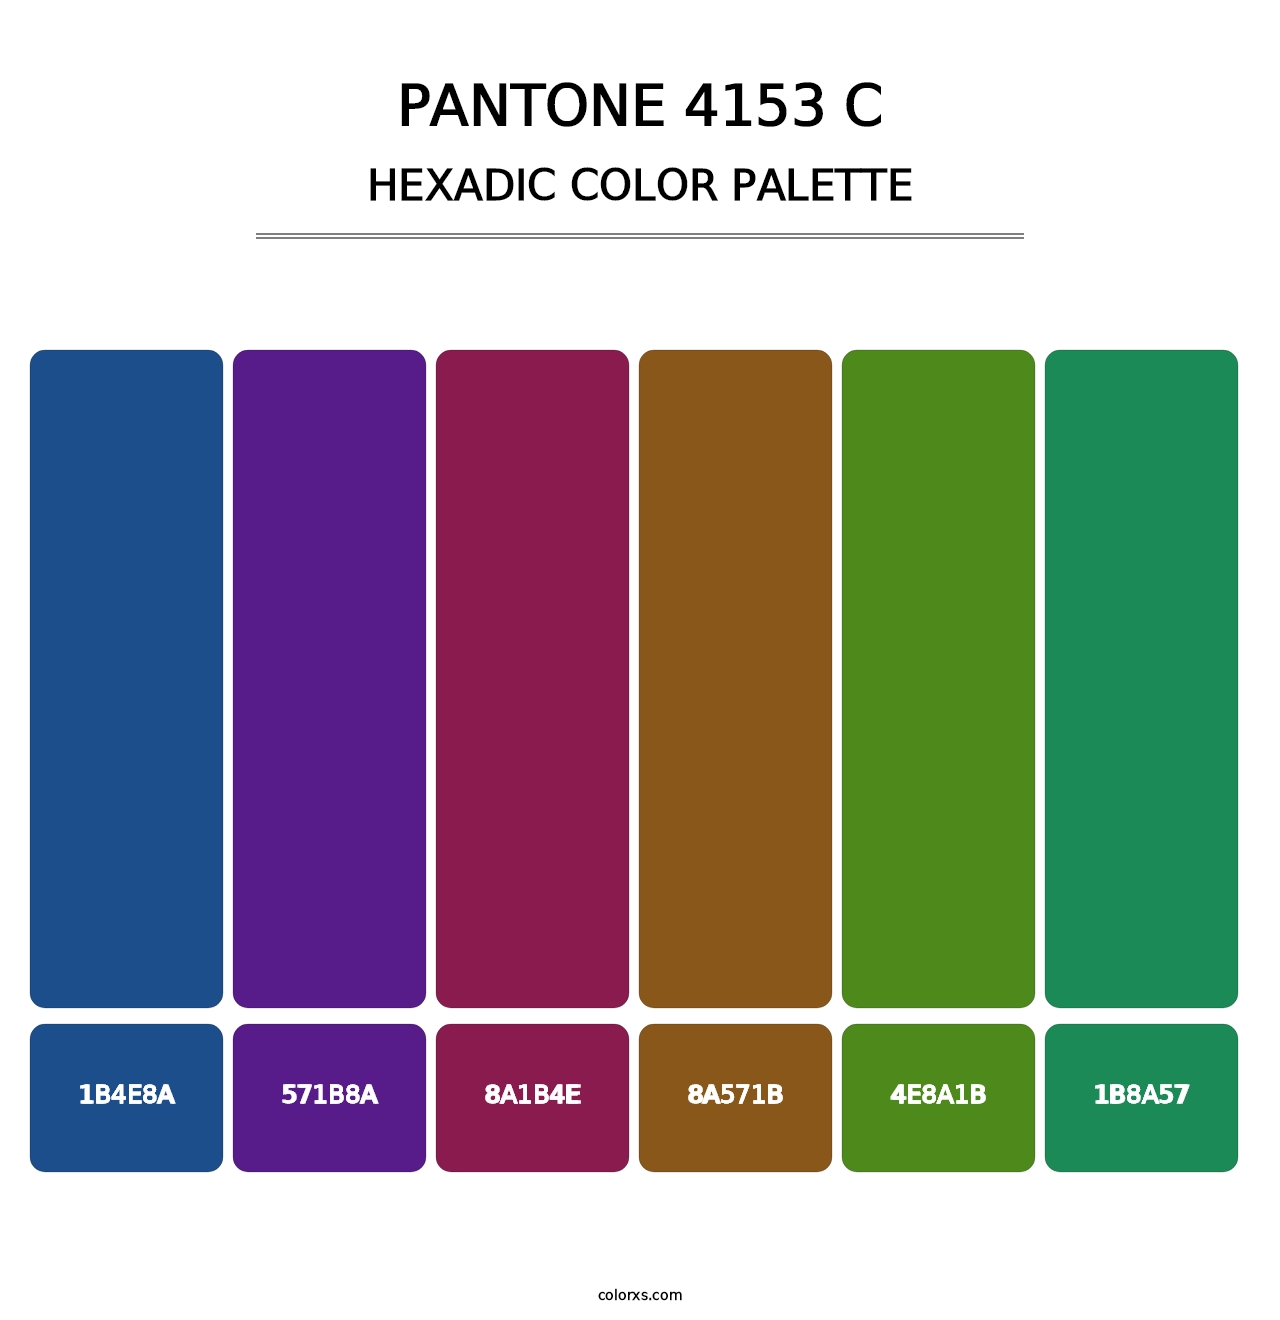 PANTONE 4153 C - Hexadic Color Palette